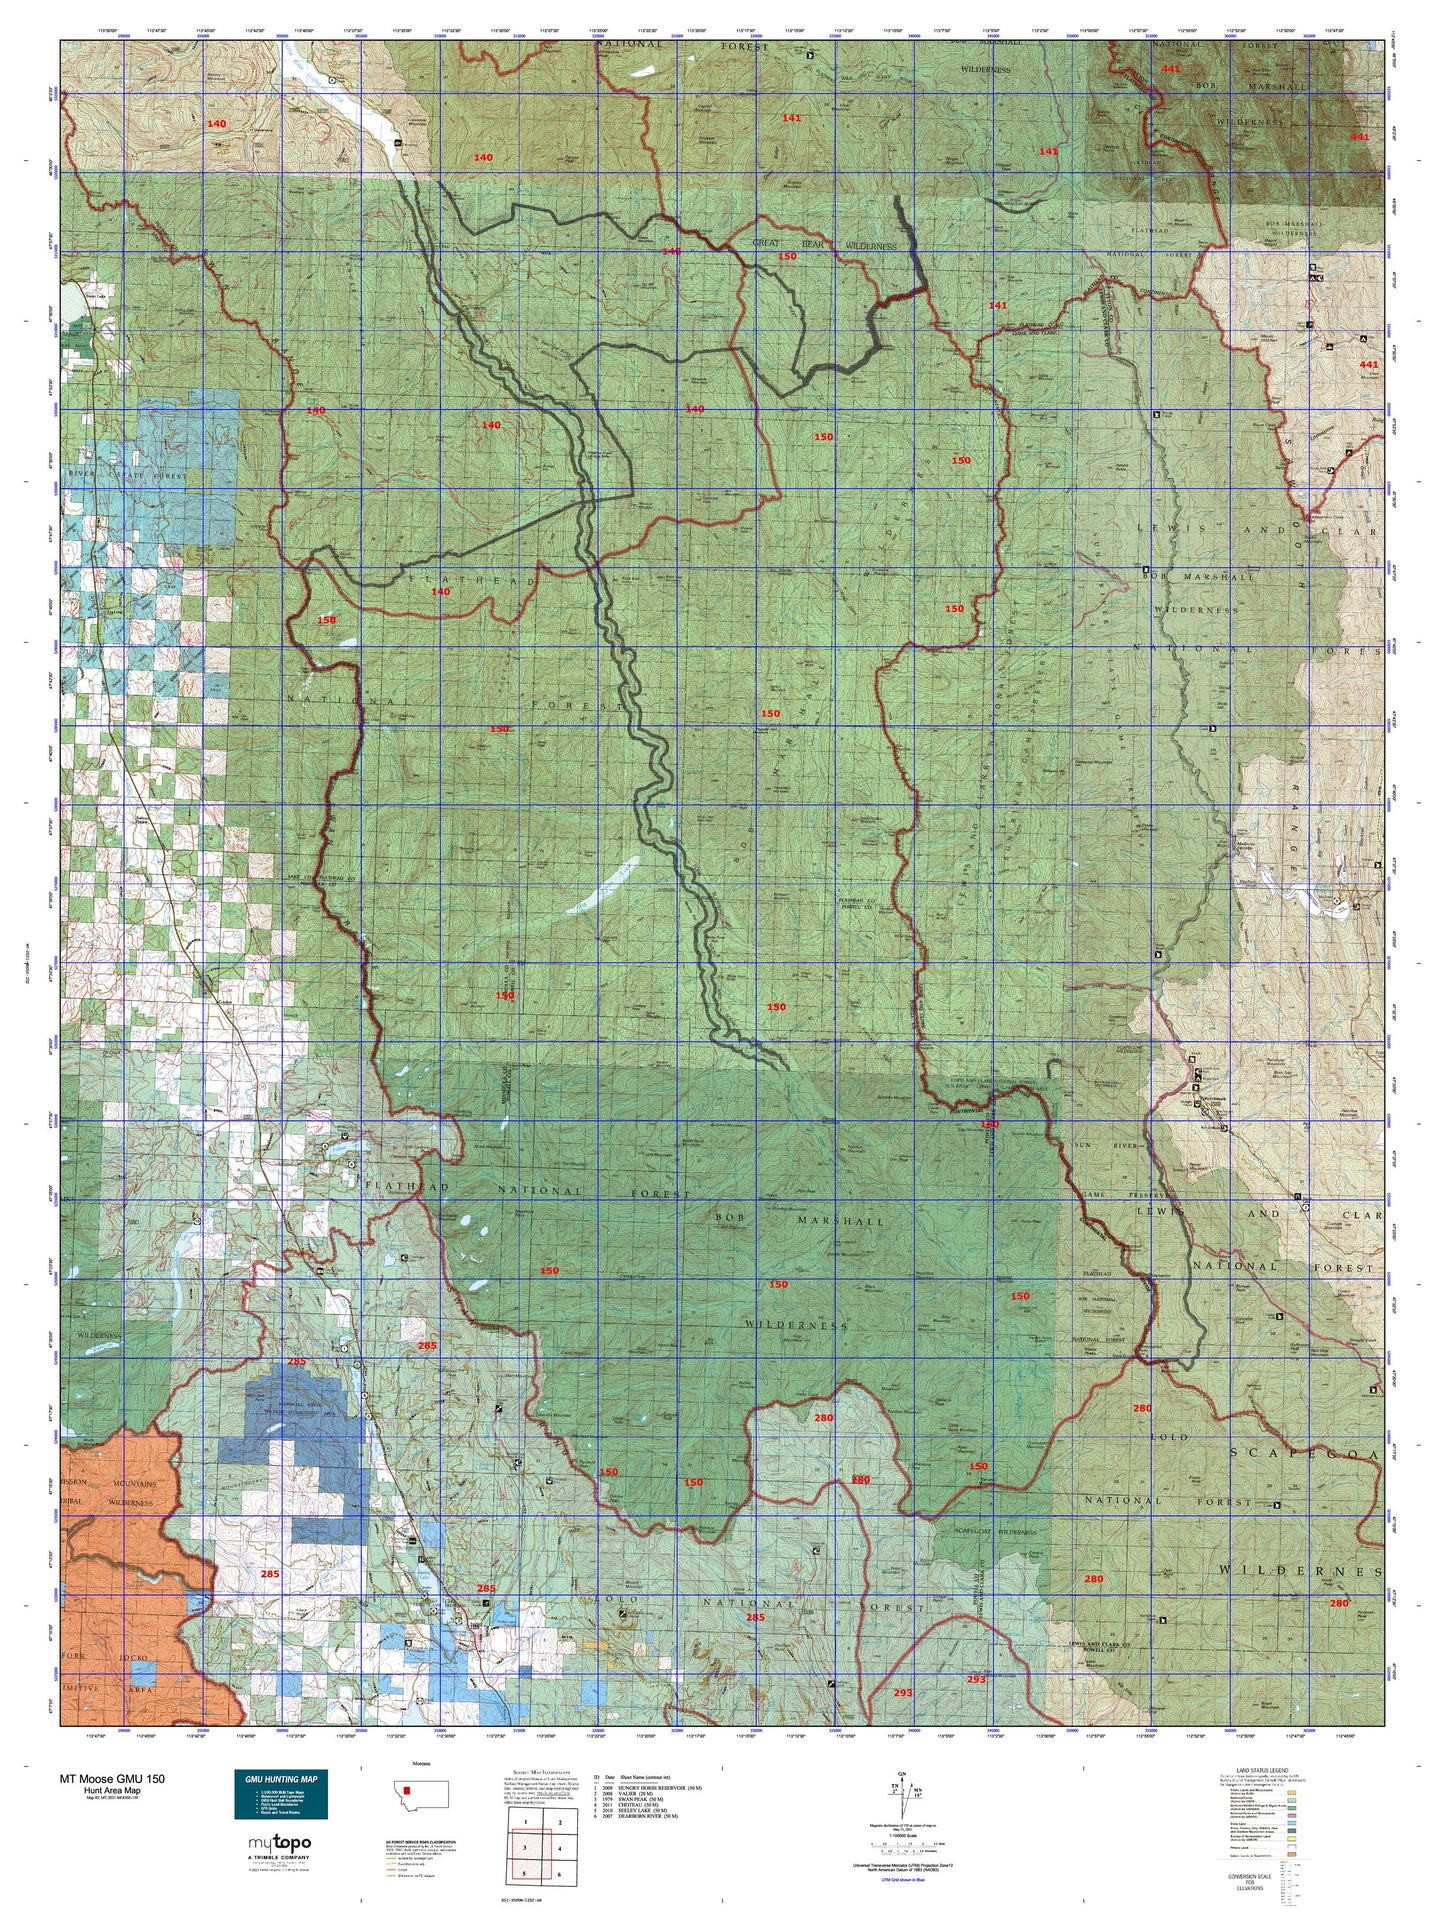 Montana Moose GMU 150 Map Image